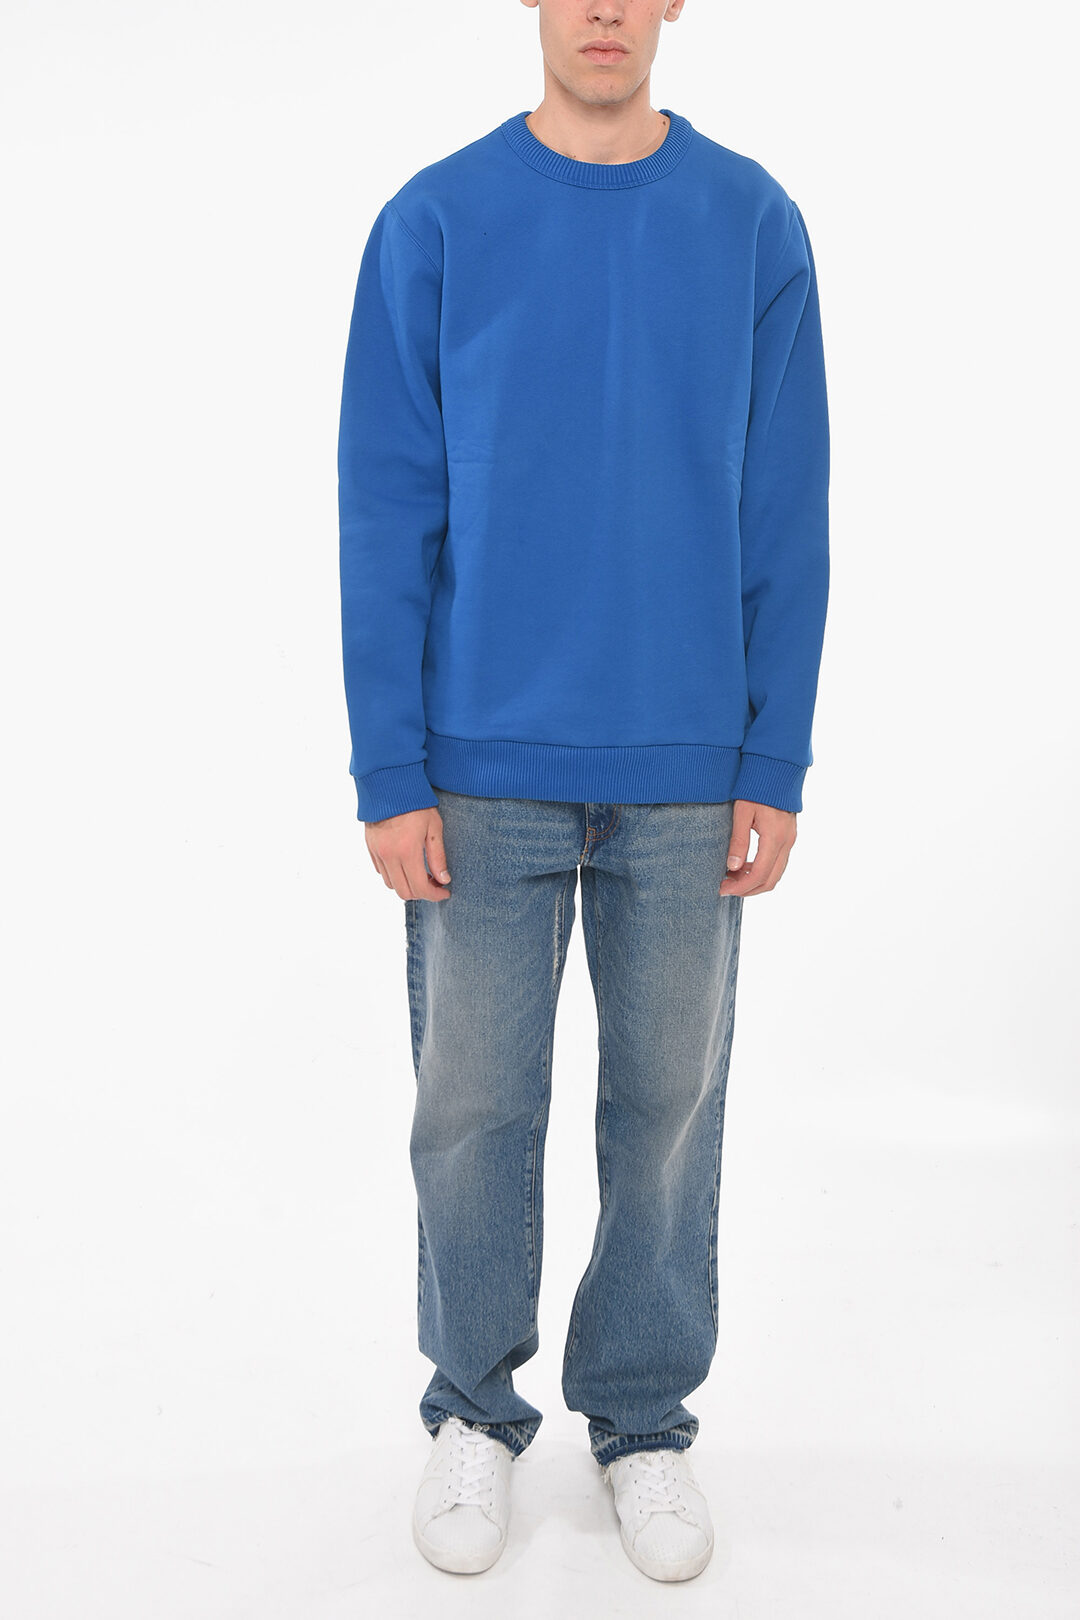 https://data.glamood.com/imgprodotto/crew-neck-burberry-limited-fleece-cotton-sweatshirt_1370123_zoom.jpg